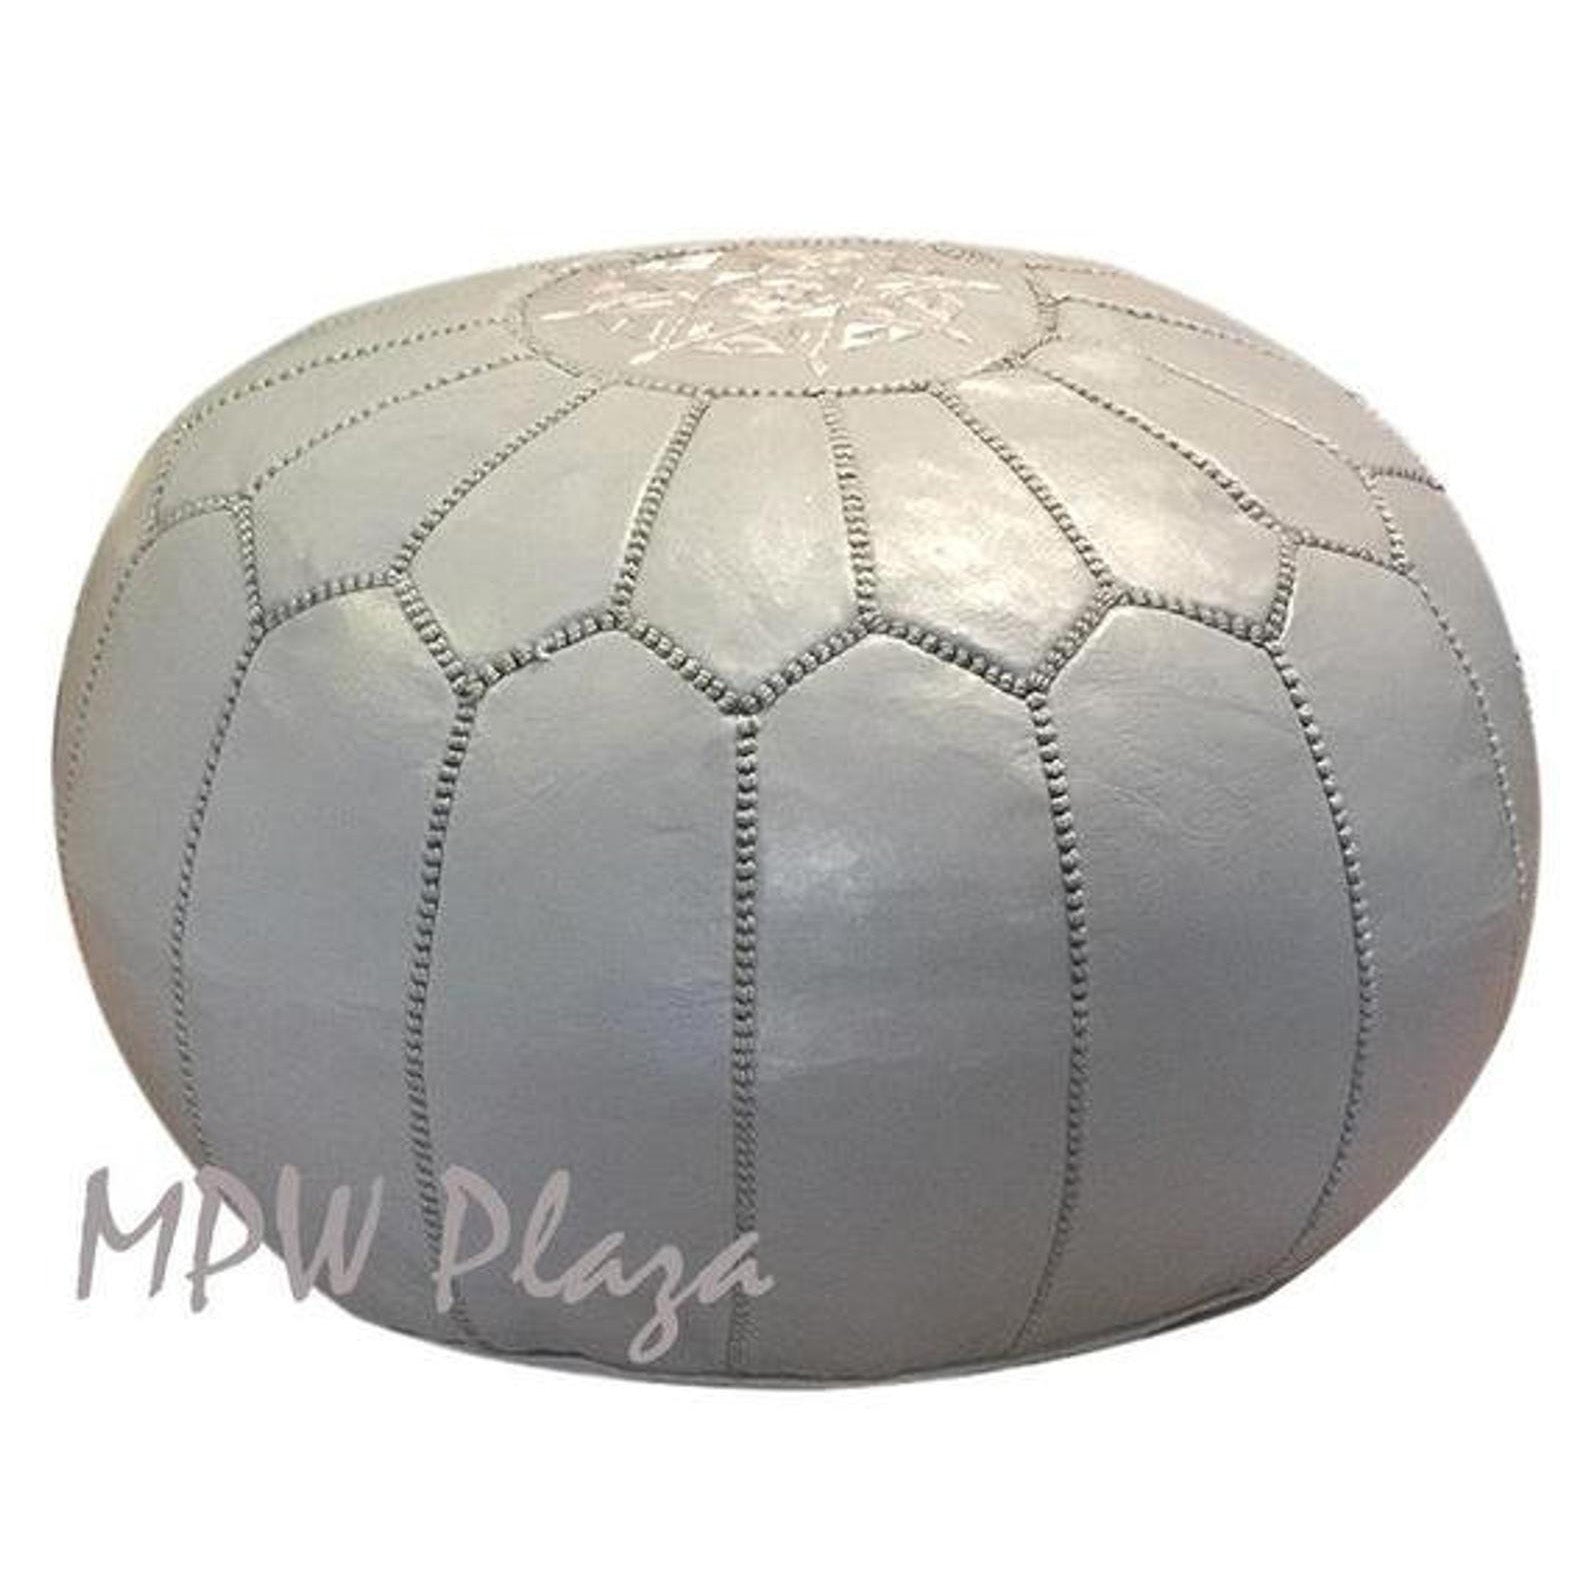 MPW Plaza® Moroccan Pouf, Light Grey Gray, 14" x 20" Topshelf Moroccan Leather   ottoman (Stuffed) freeshipping - MPW Plaza®